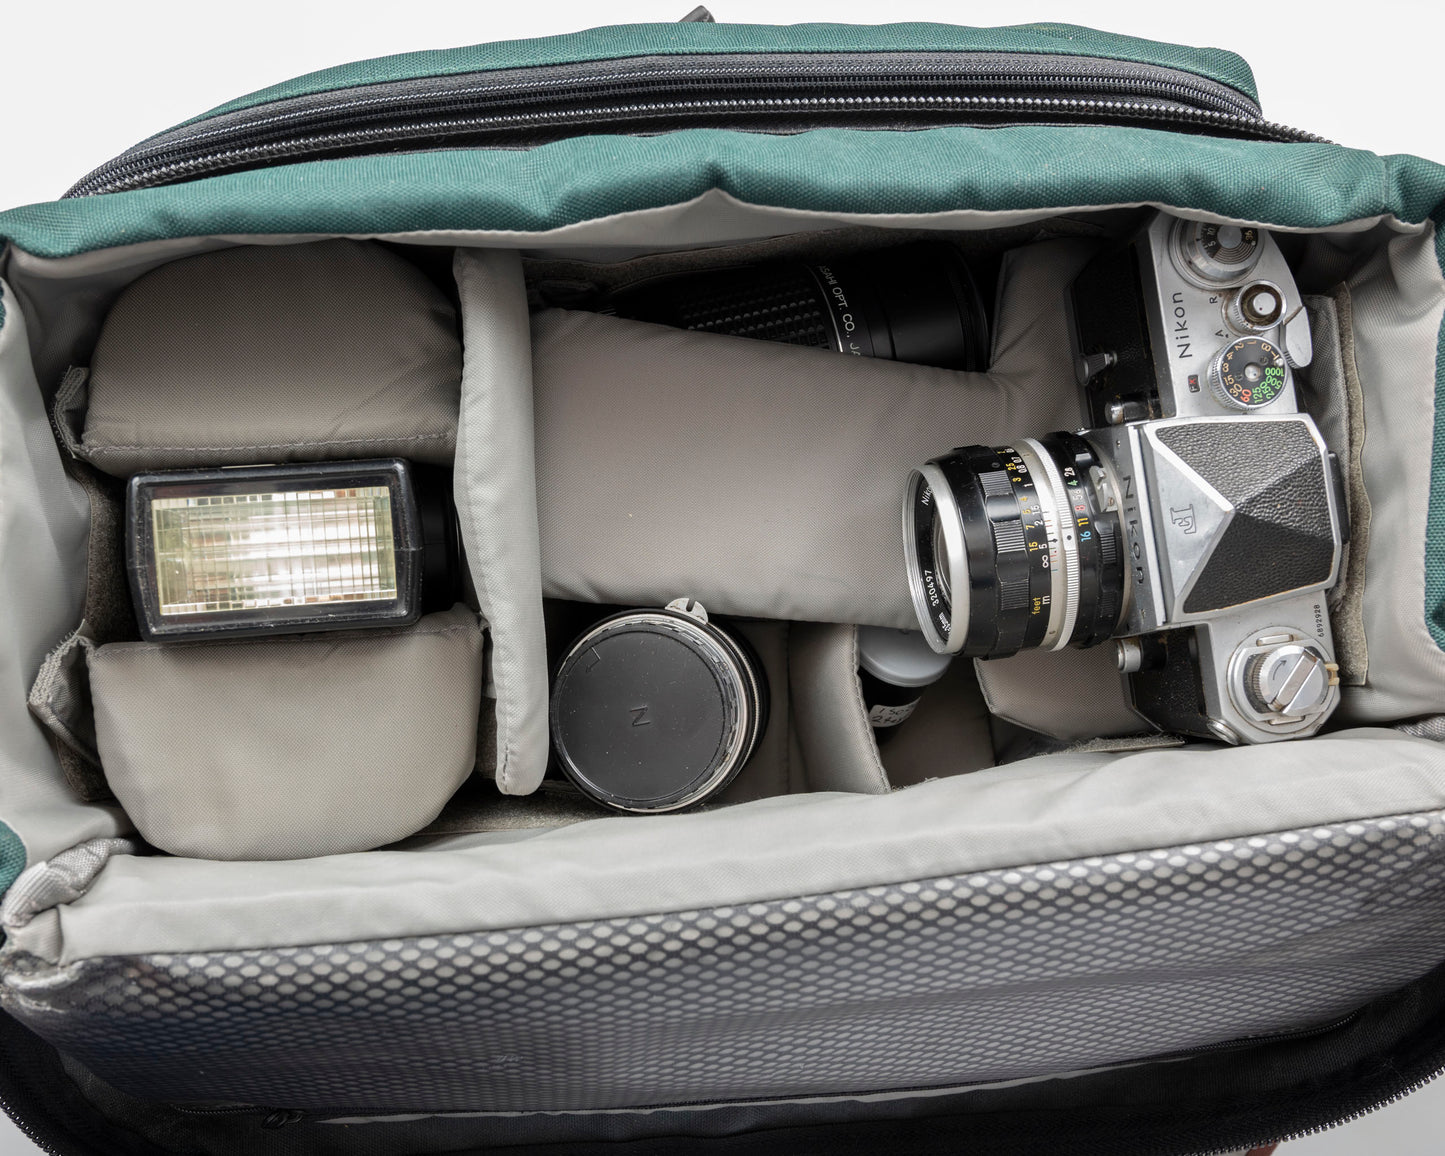 Lowepro Nova 5 large camera bag